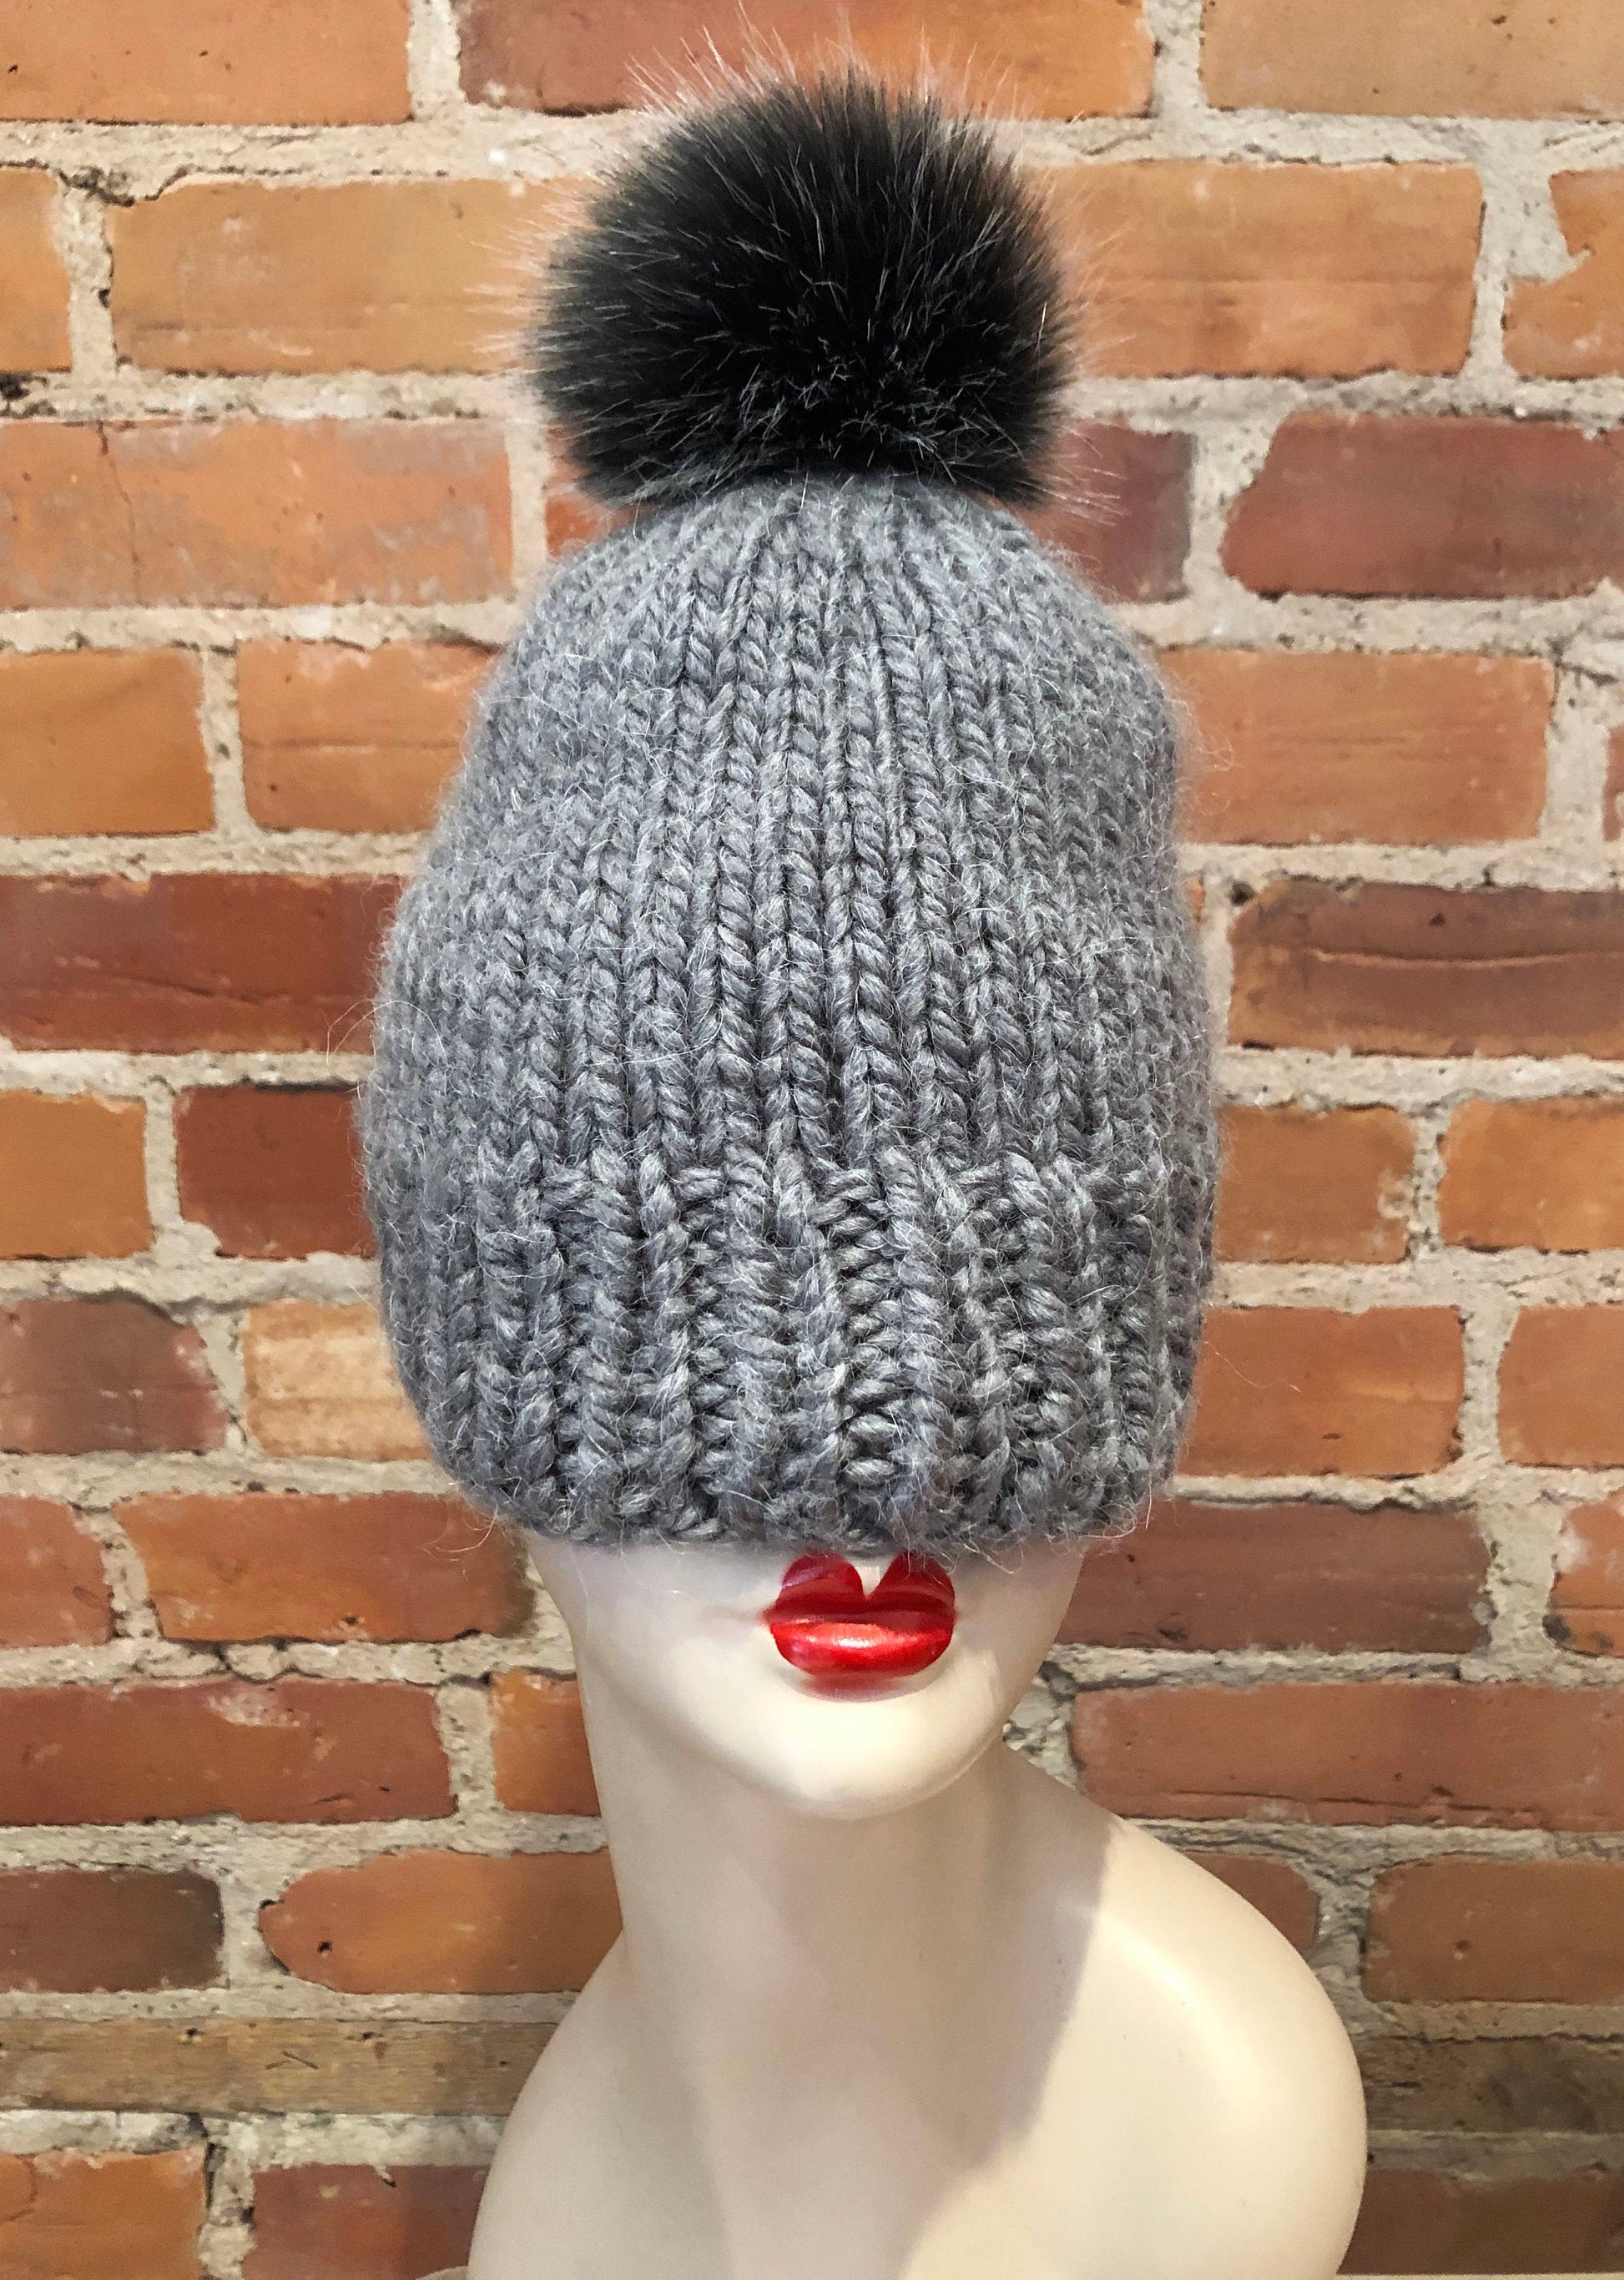 Black Silver Pom Pom on a grey knit hat